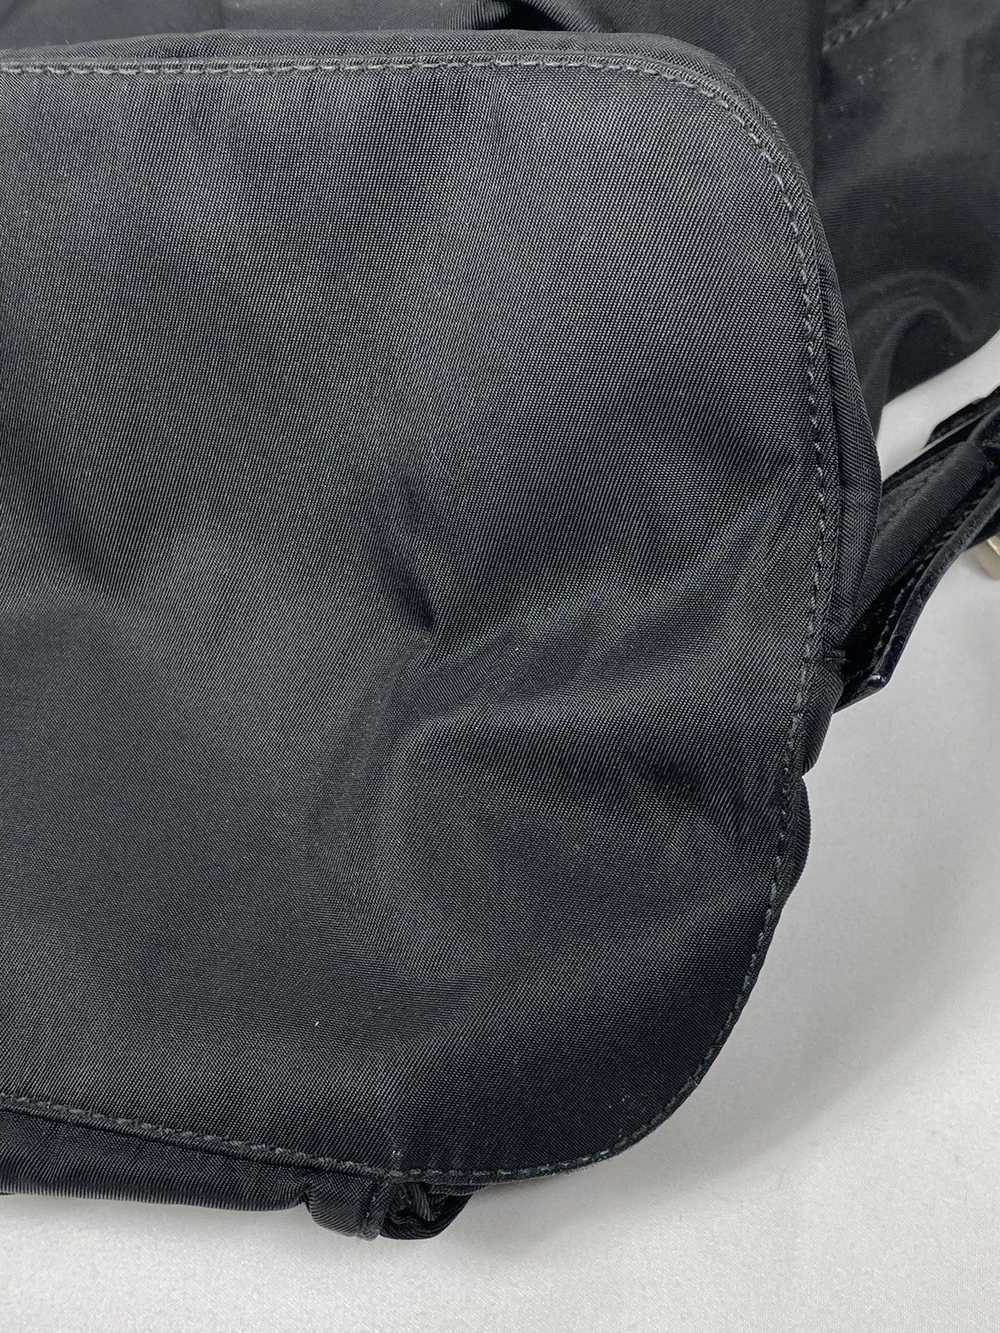 Prada Tessuto Nylon Backpack - image 10